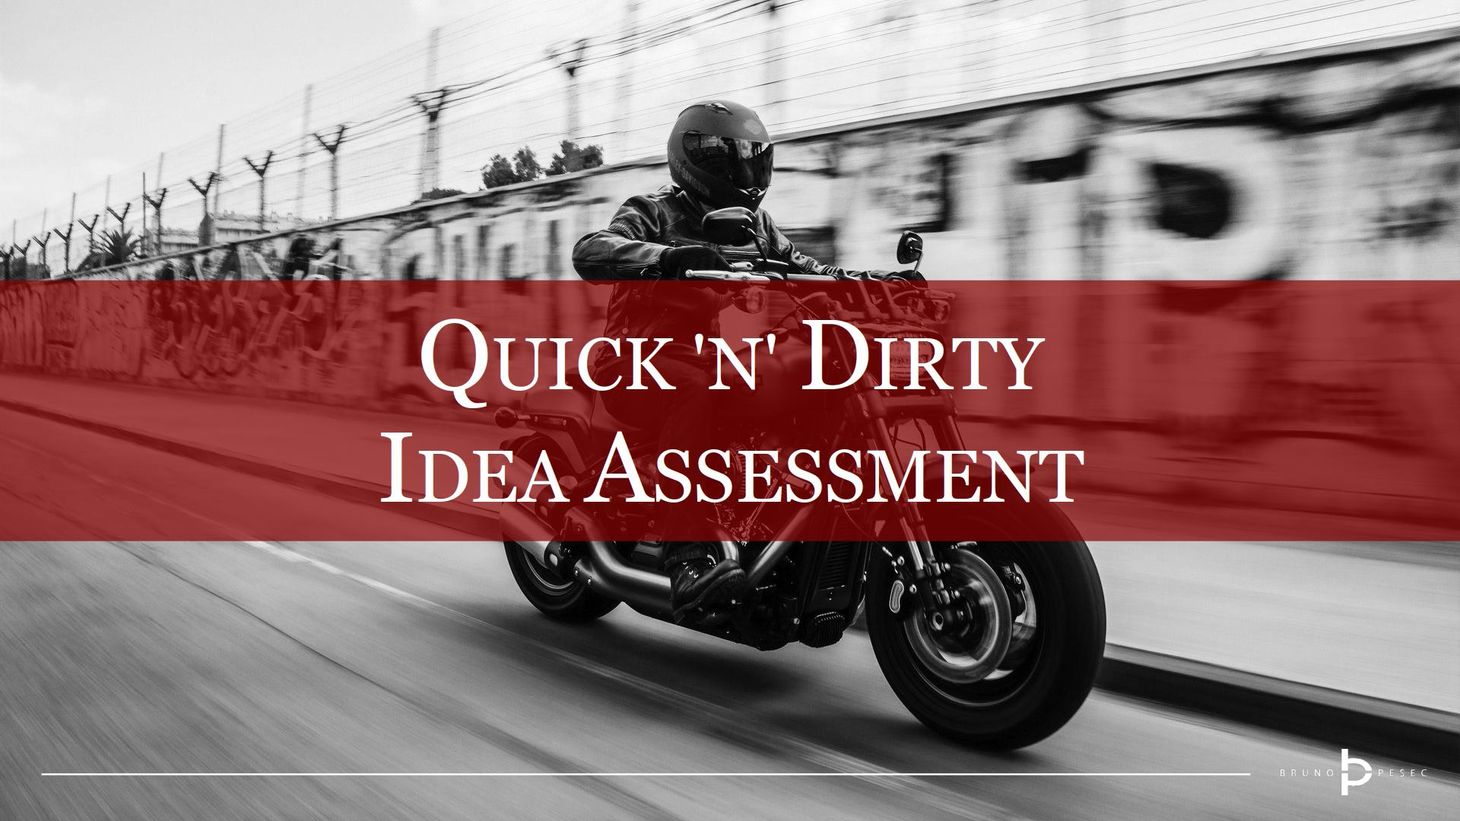 Quick 'n' dirty idea assessment